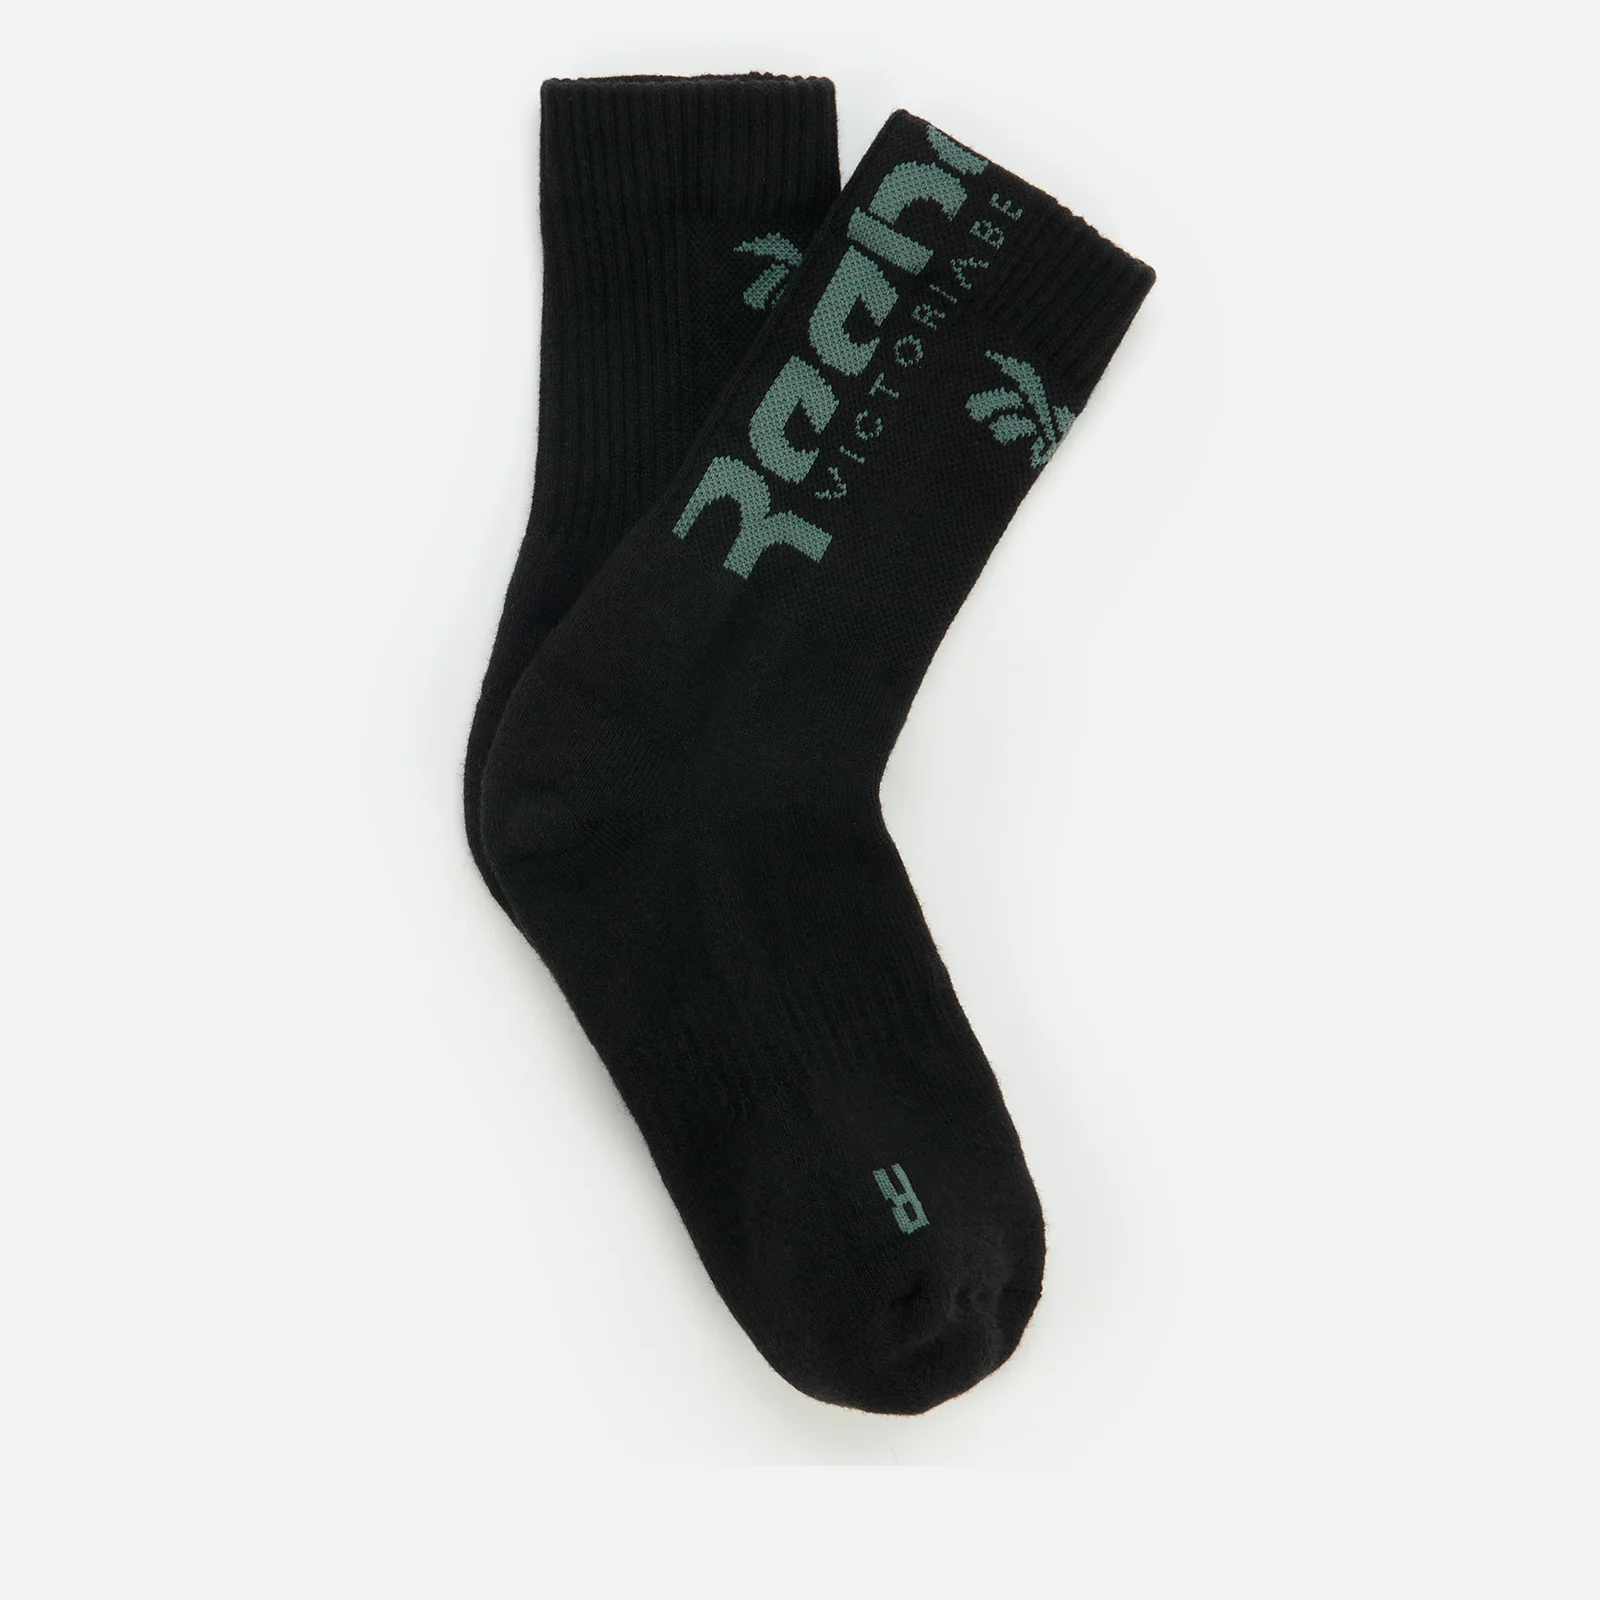 Reebok X Victoria Beckham Women's Crew Socks - Black Image 1